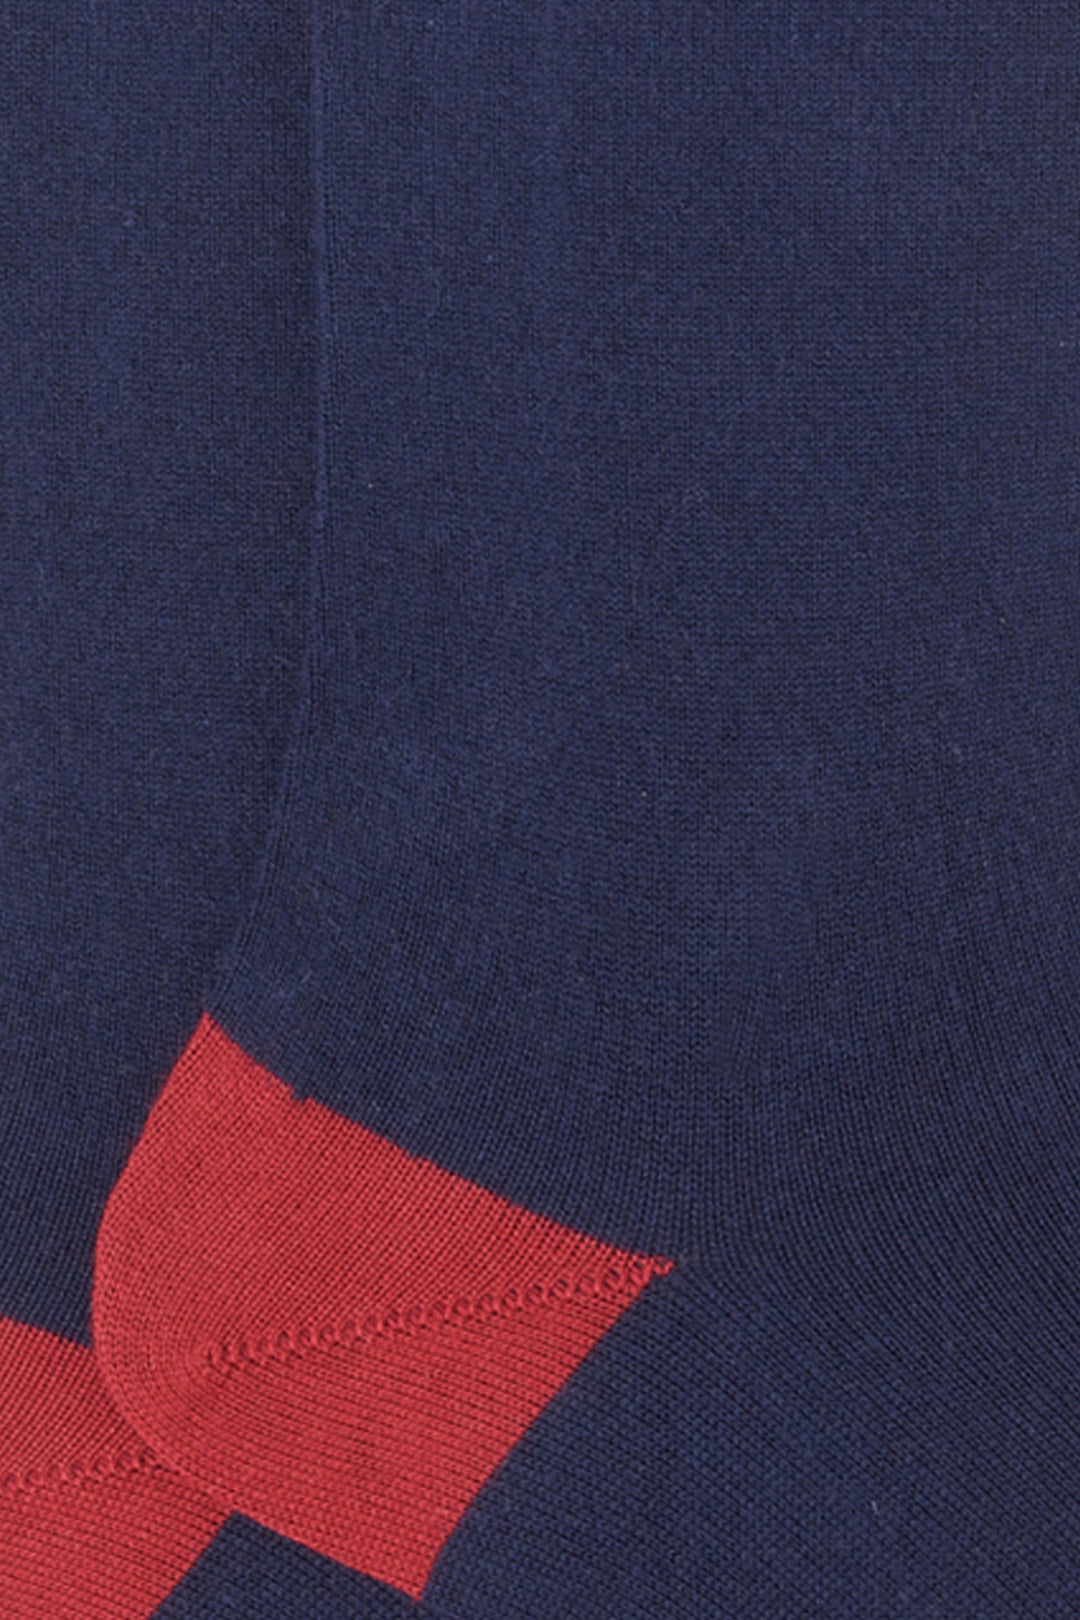 GALLO Calze lunghe cotone e cashmere navy tinta unita e contrasti - Mancinelli 1954